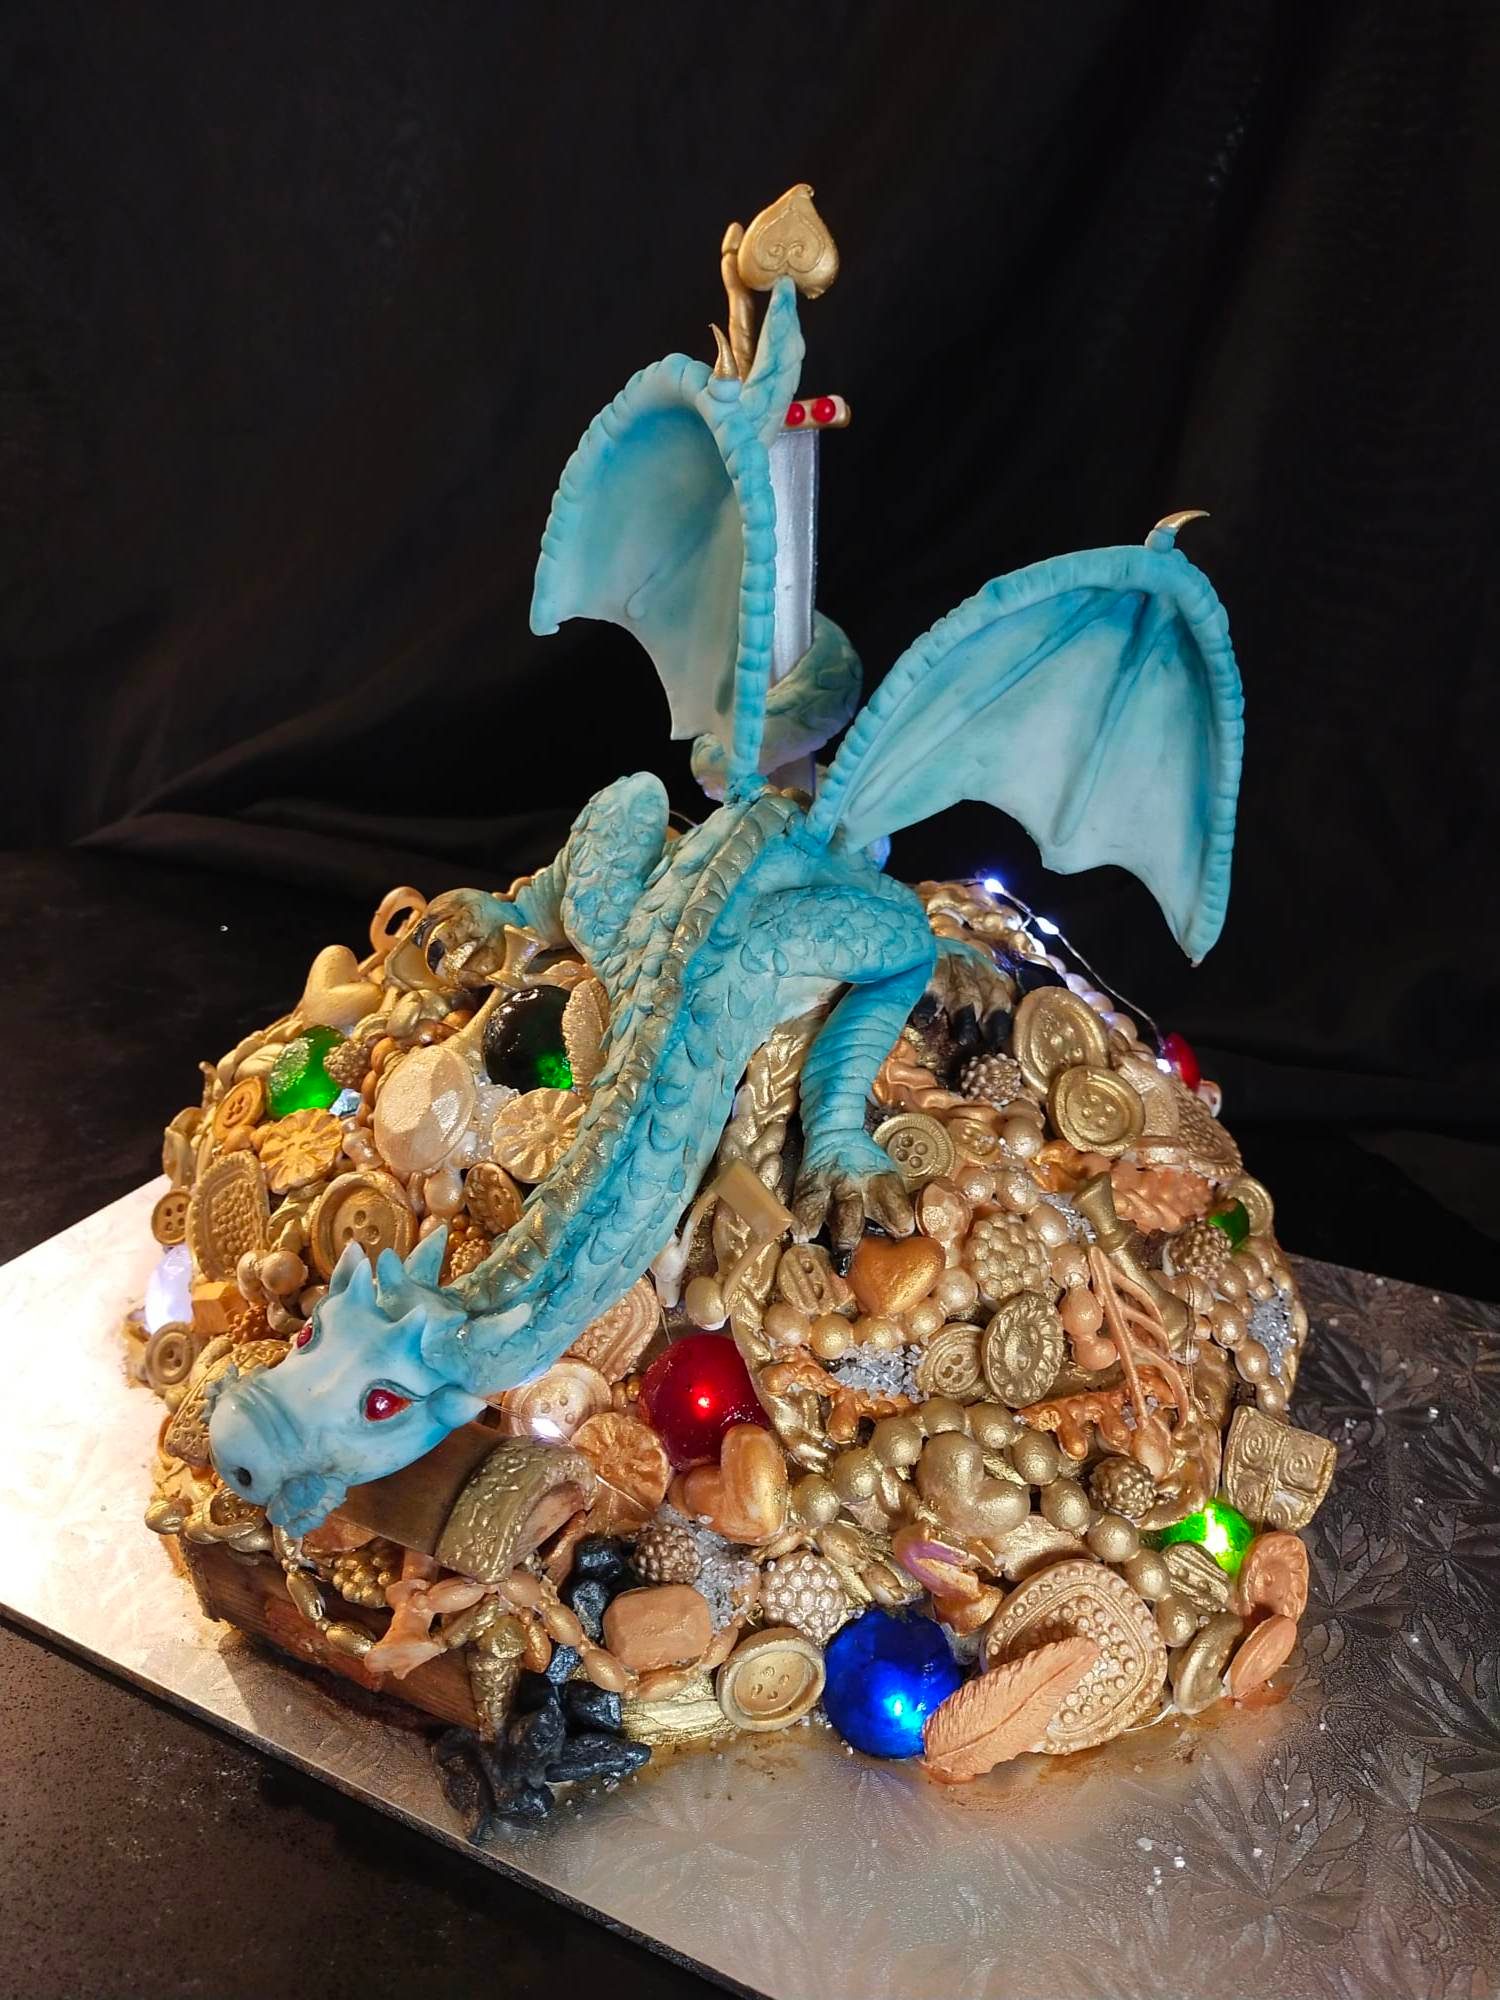 A dragon cake custom made for my dad, every embellishment hand made